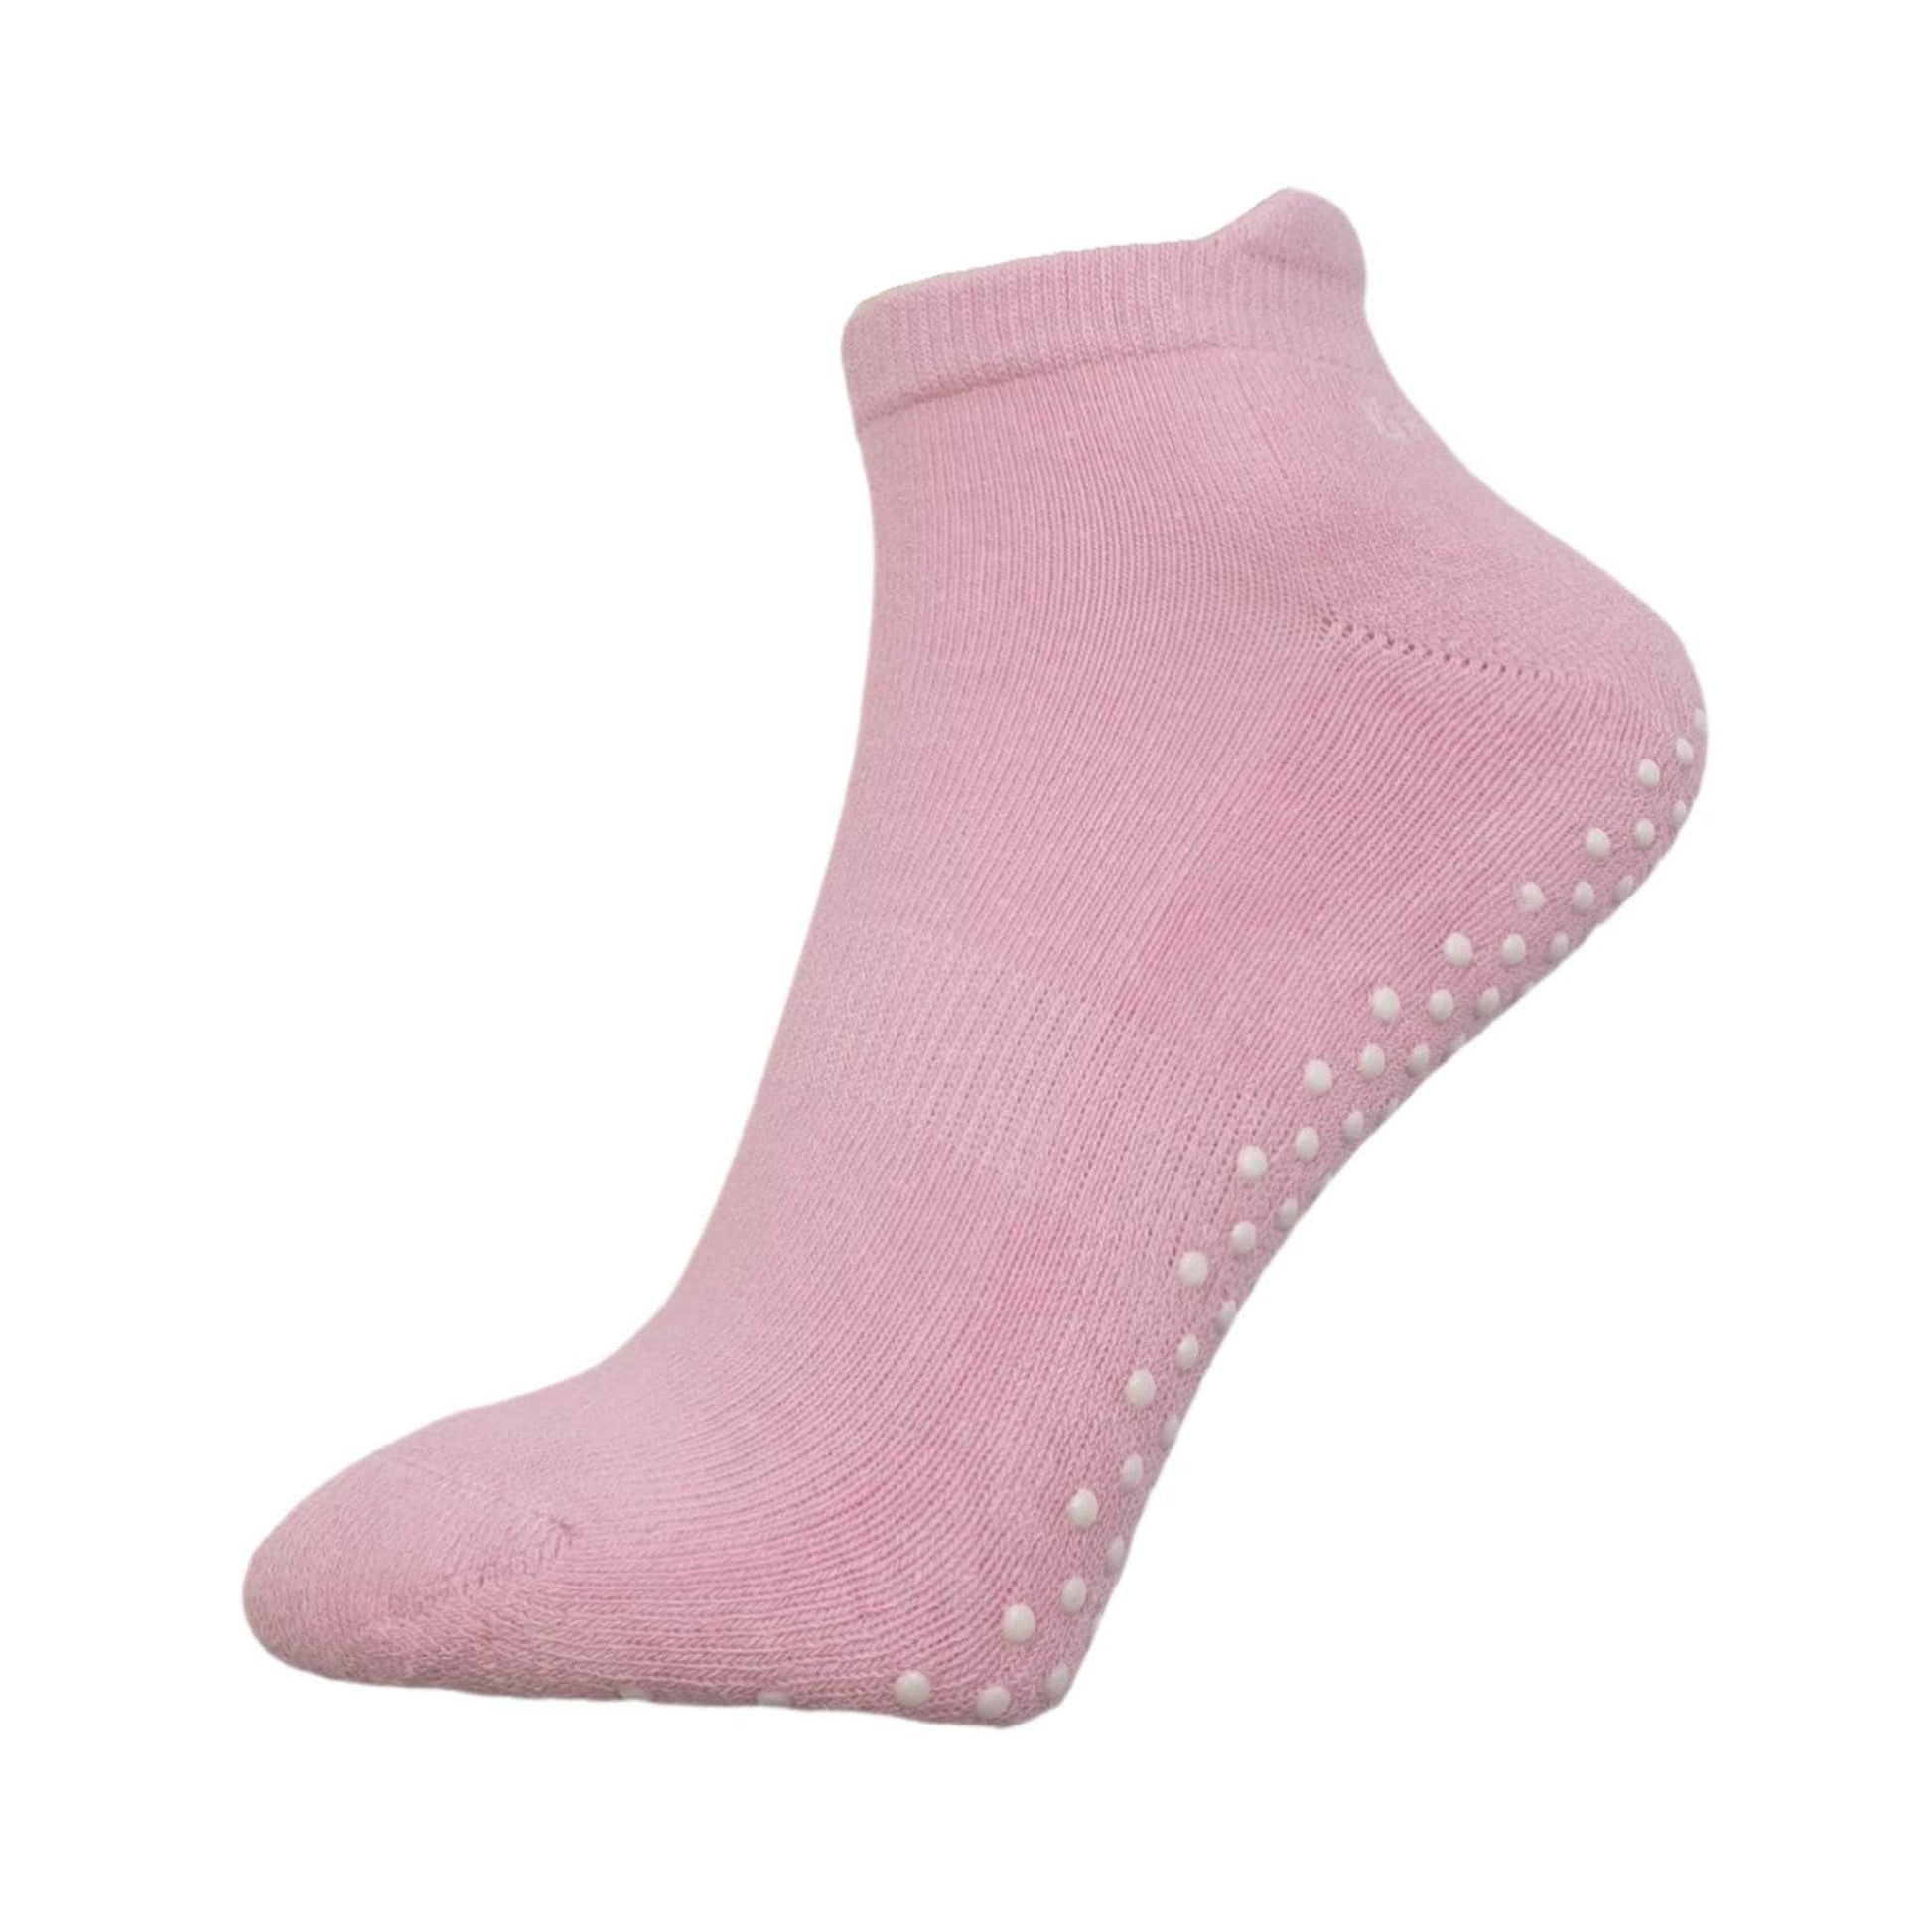 Gripperz Adult Grip Socks, Non Slip Active Socks